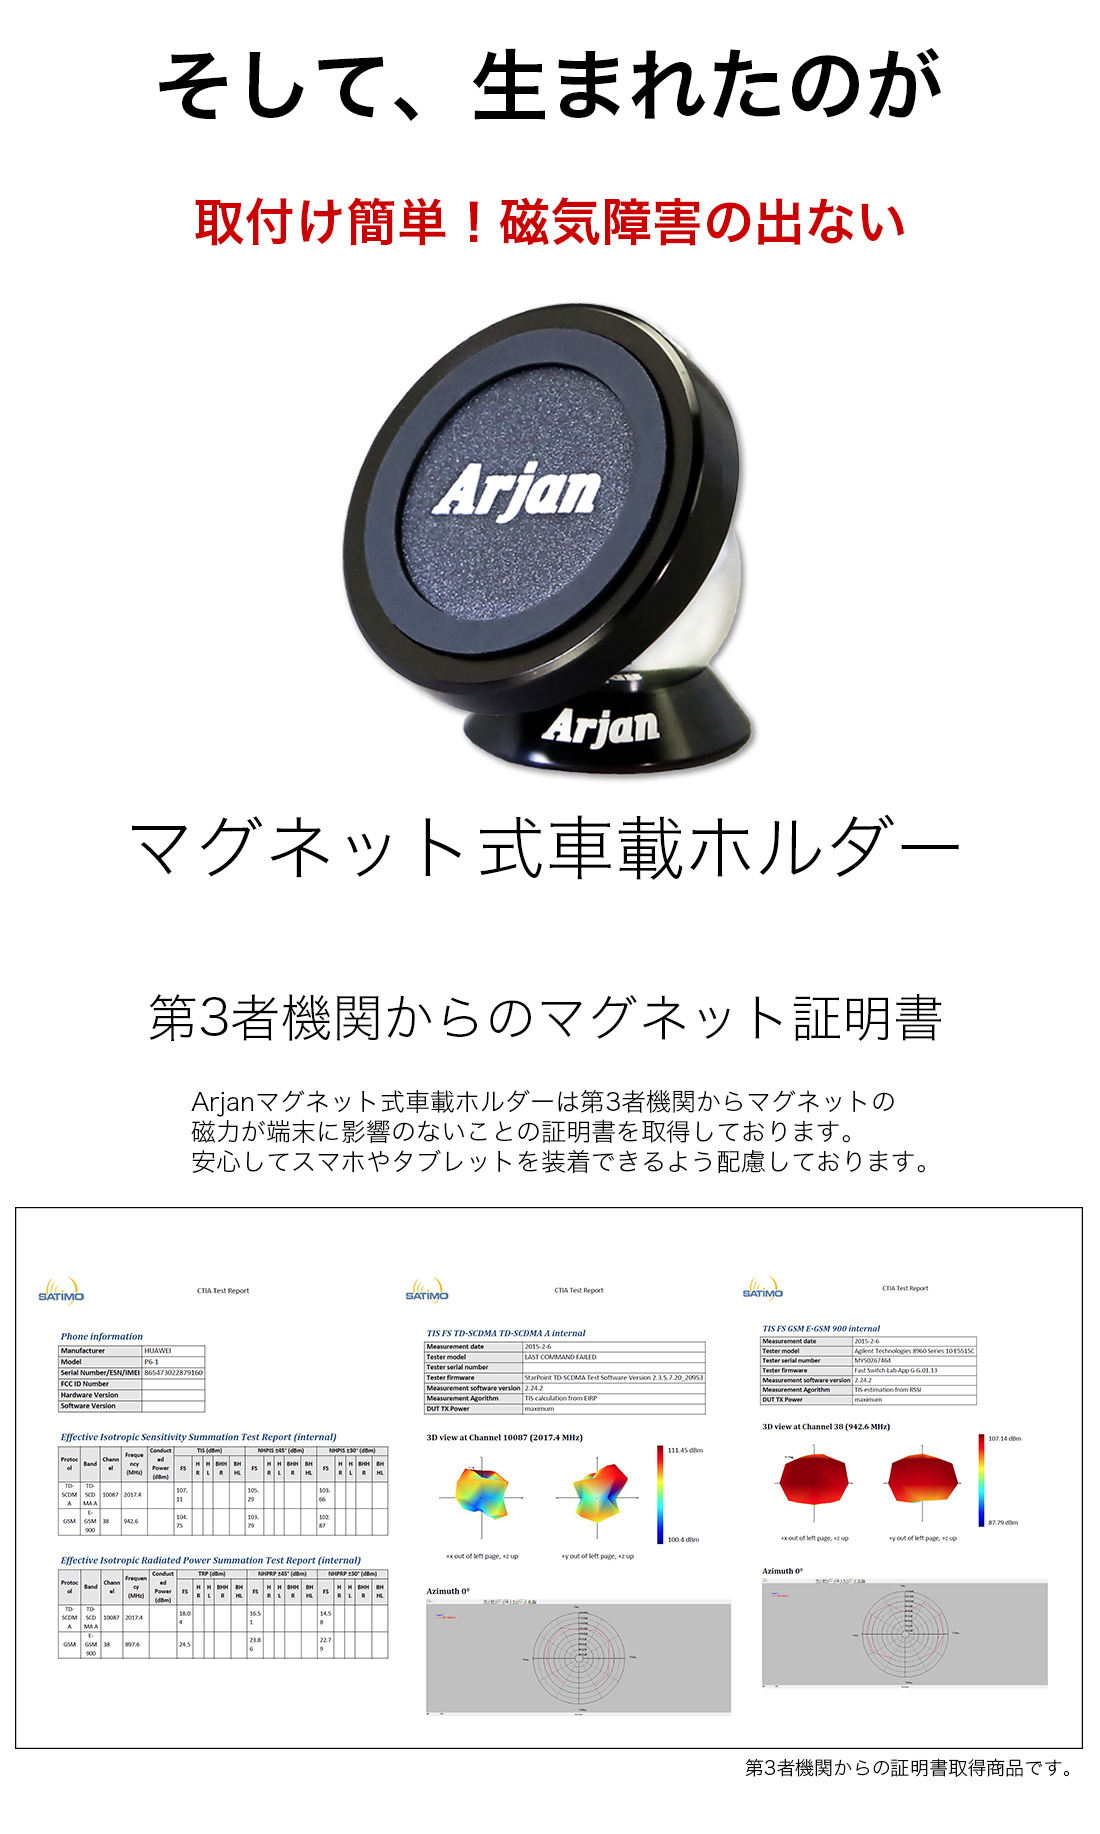 Buy Now Japan Embrace The Jdm Culture